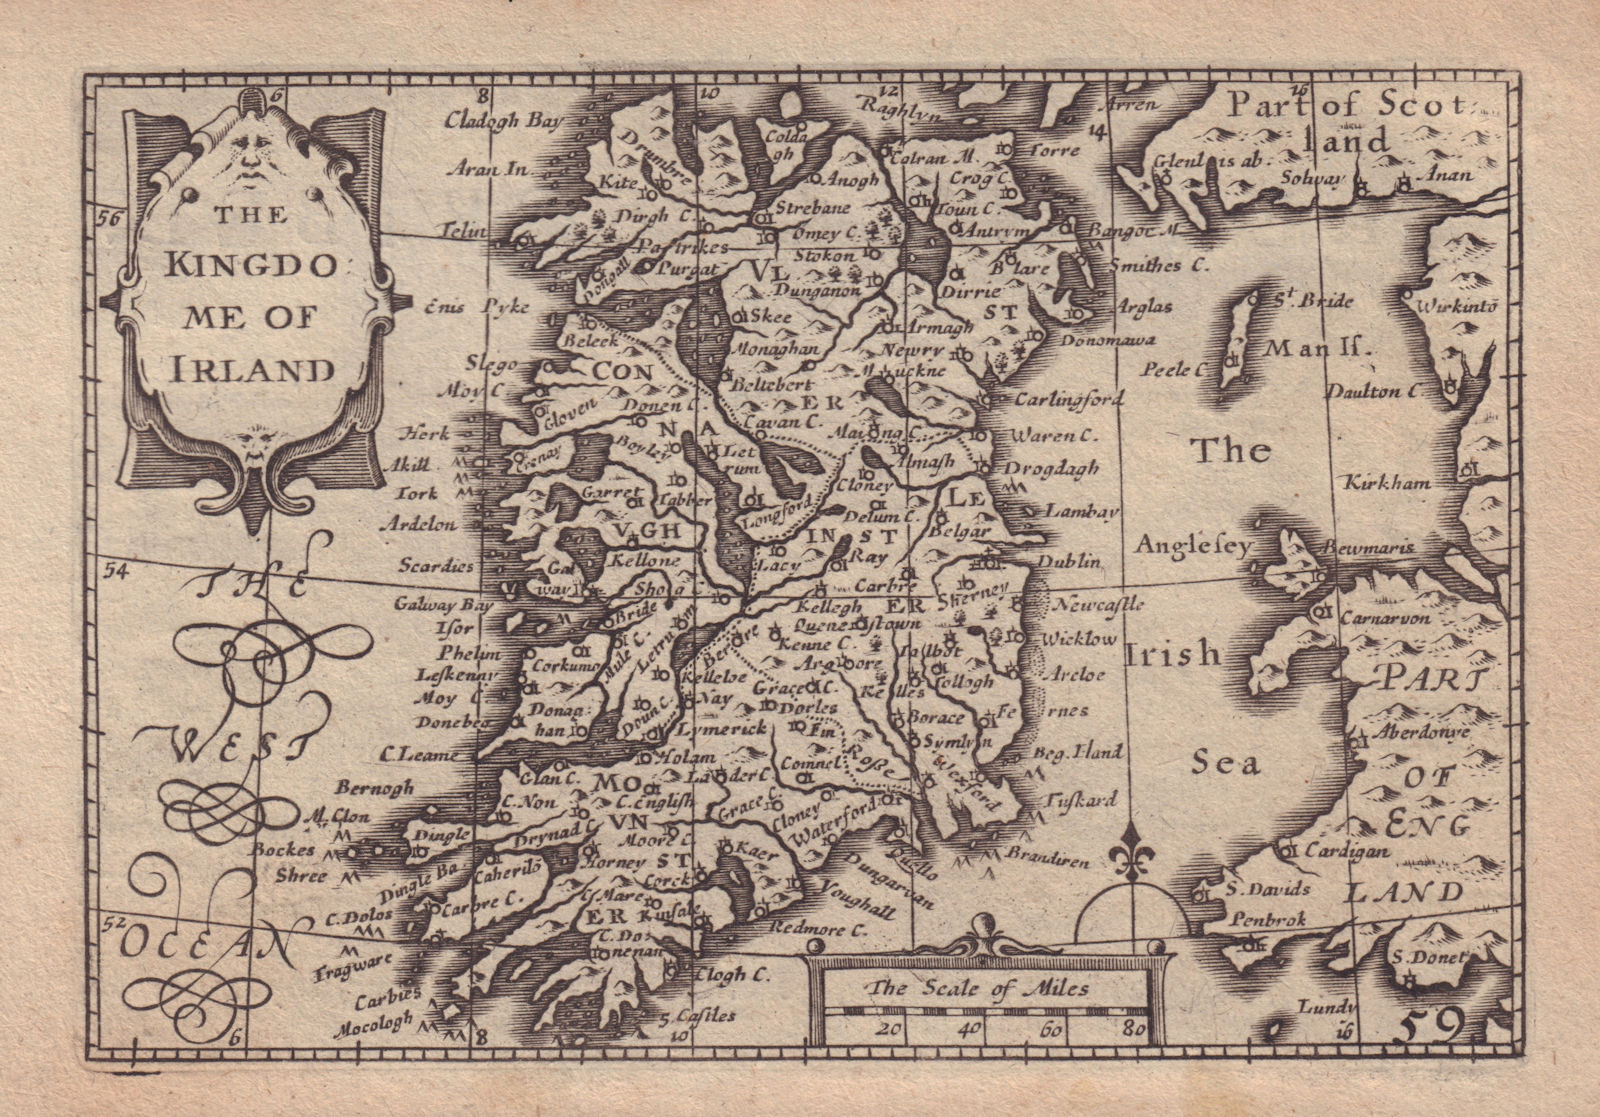 The Kingdome of Irland by van den Keere. "Speed miniature" Ireland 1632 map